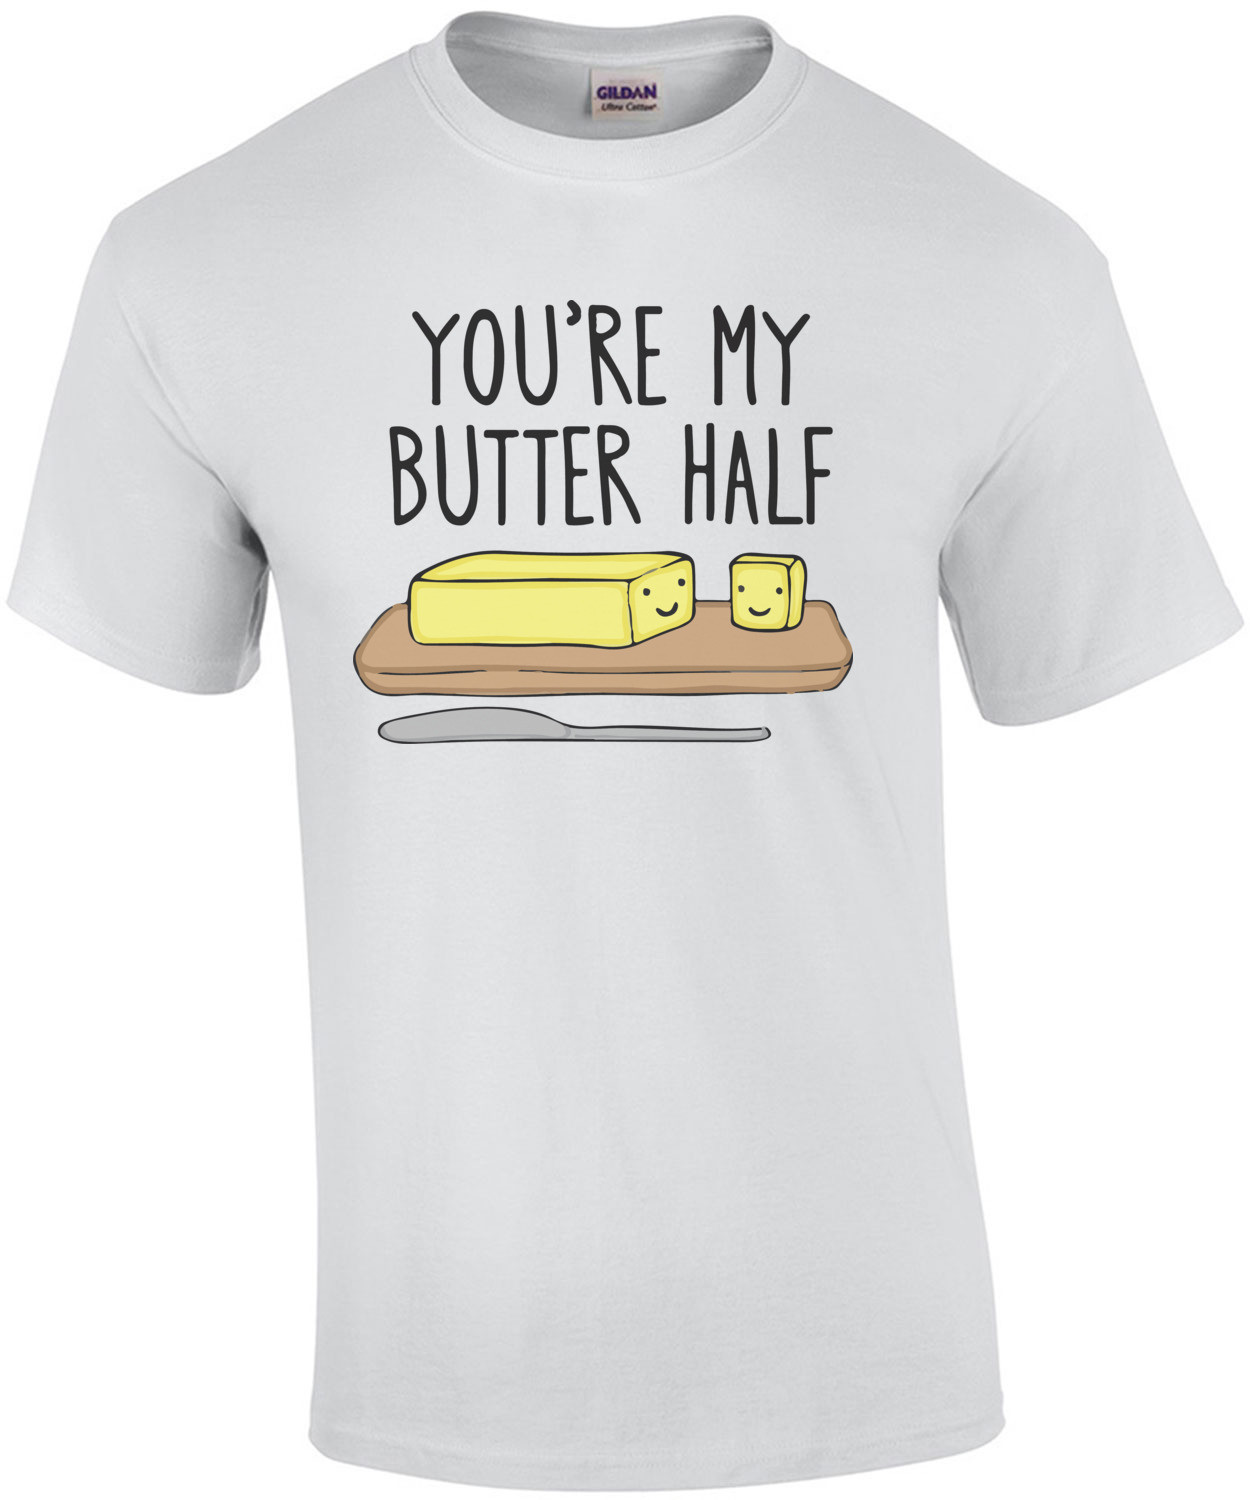 You're my butter half pun